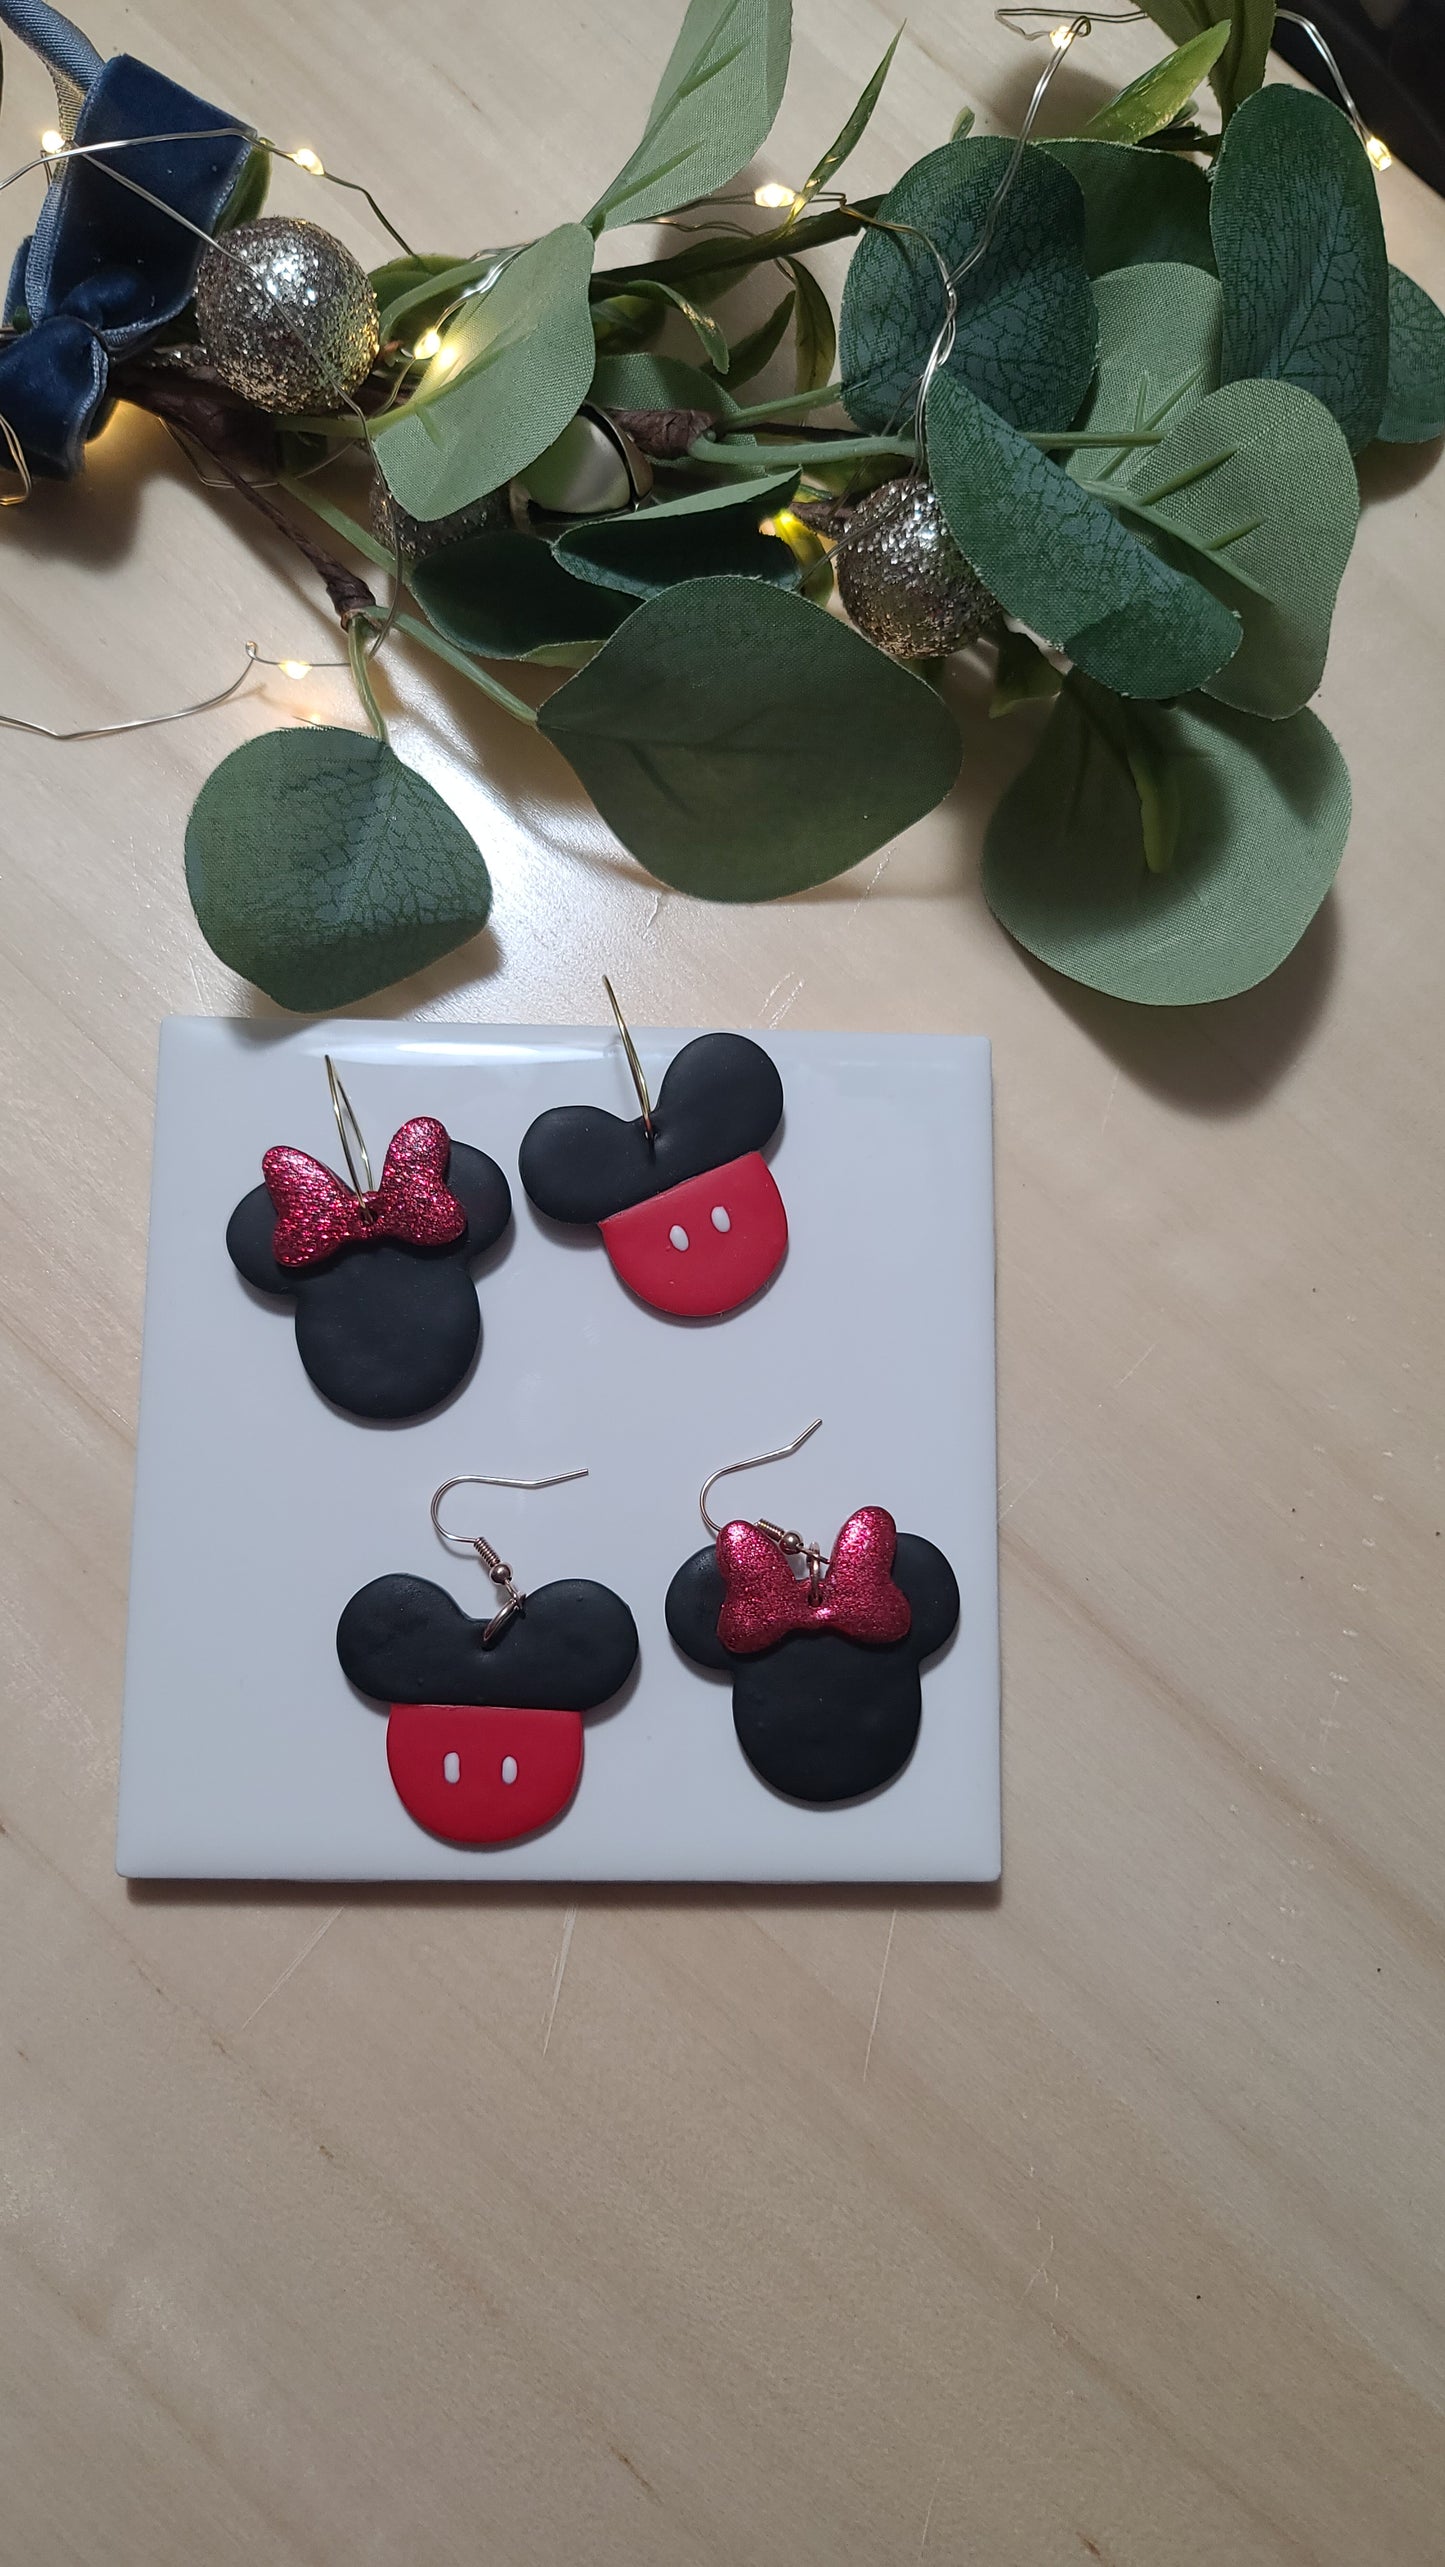 Mickey and Minnie Earrings